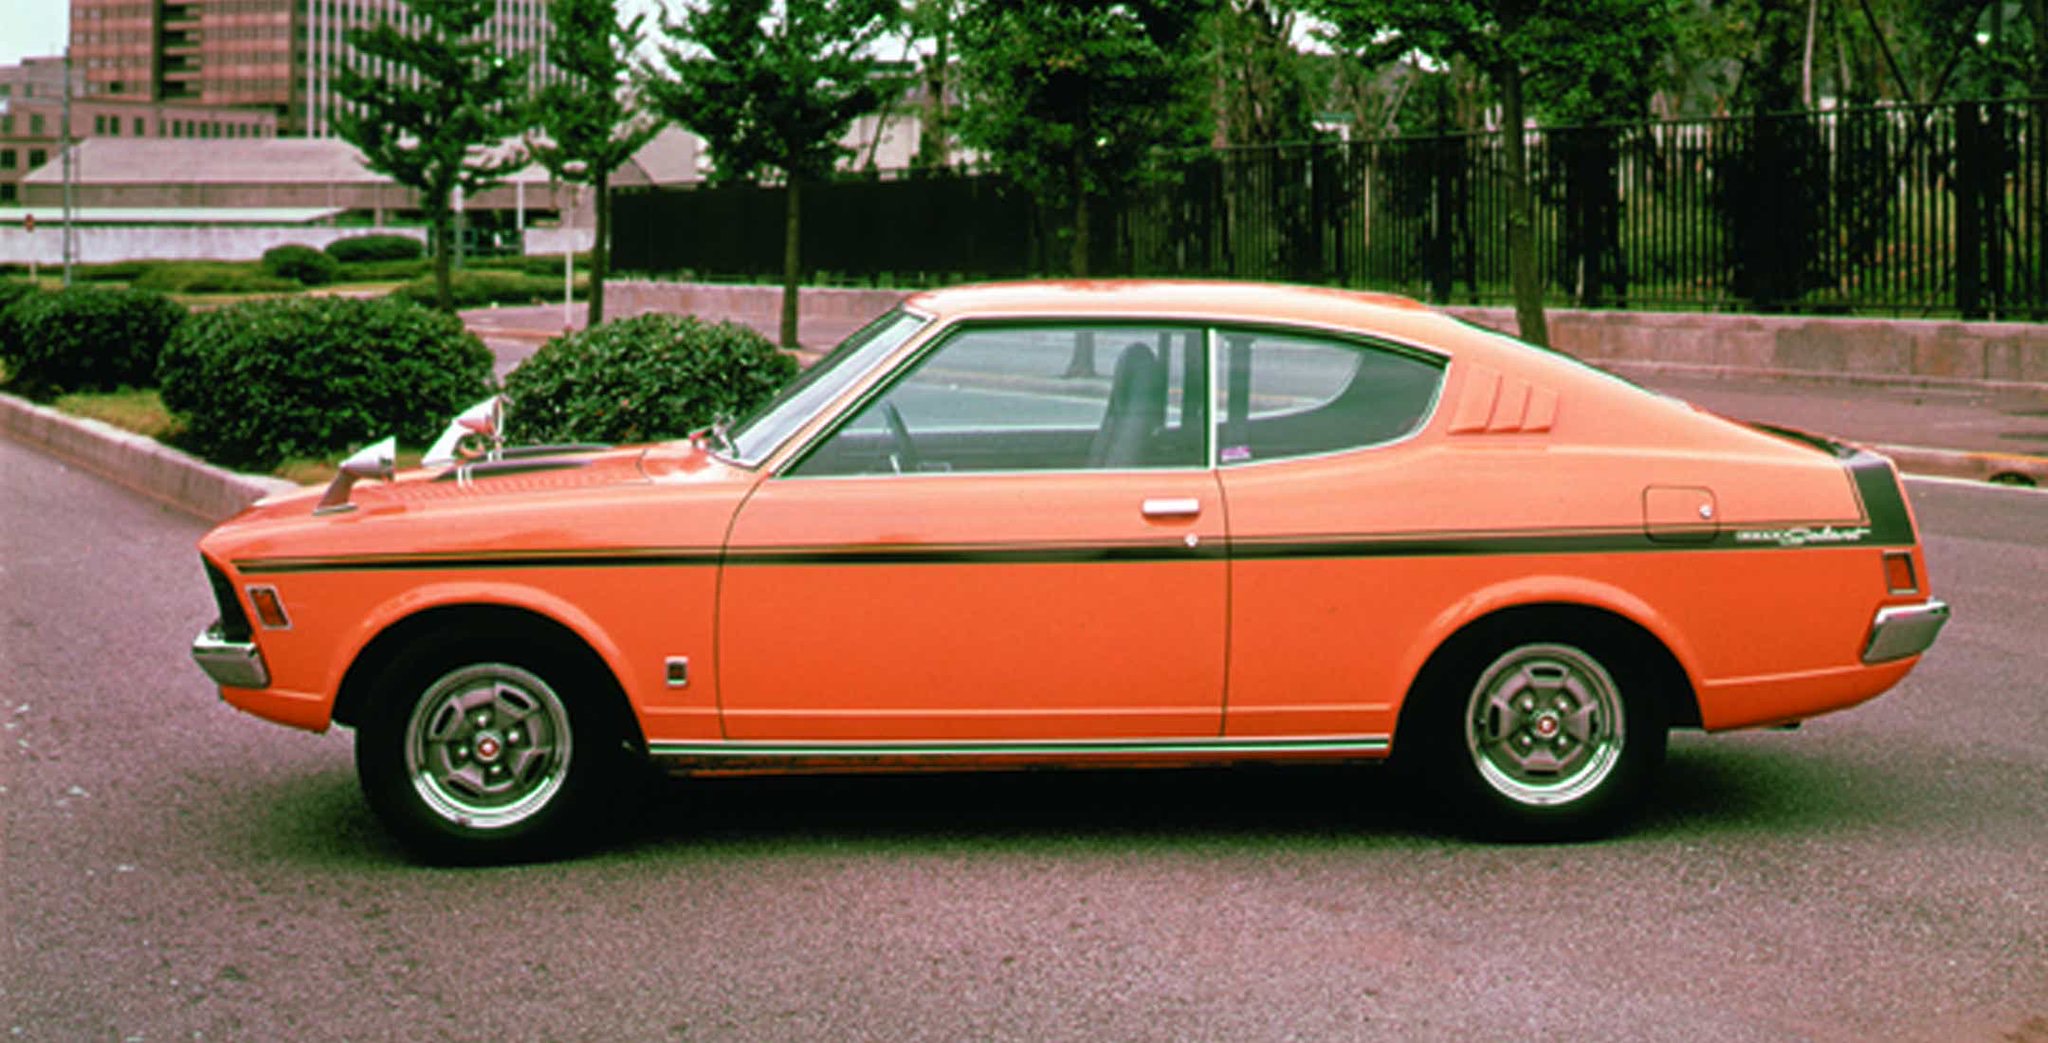 1970 Mitsubishi Galant GTO side